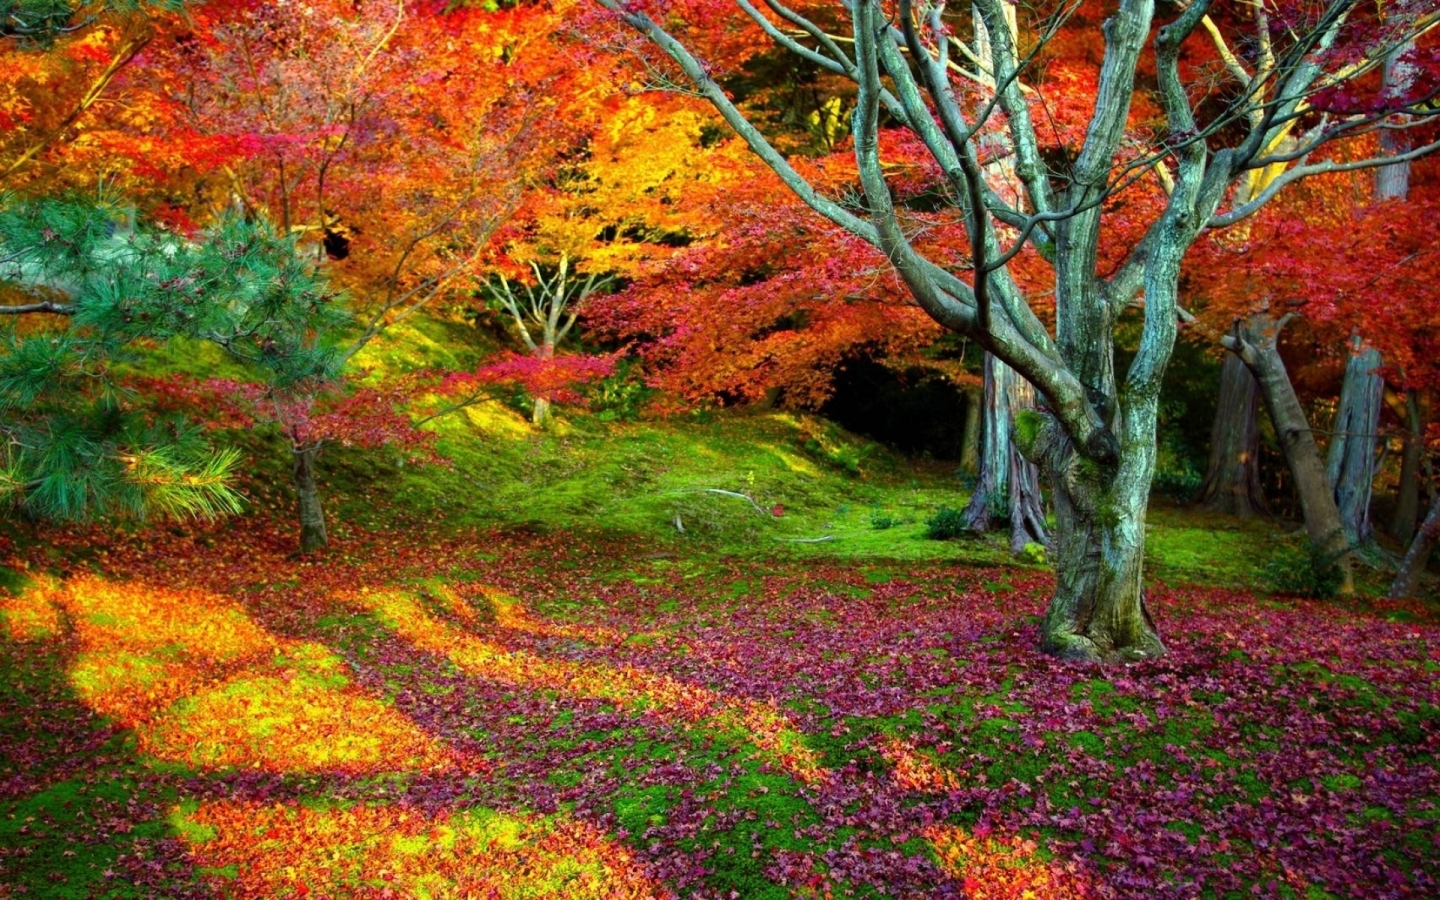 Colorful Fall Day Widescreen Wallpaper. Wide Wallpaper.NET